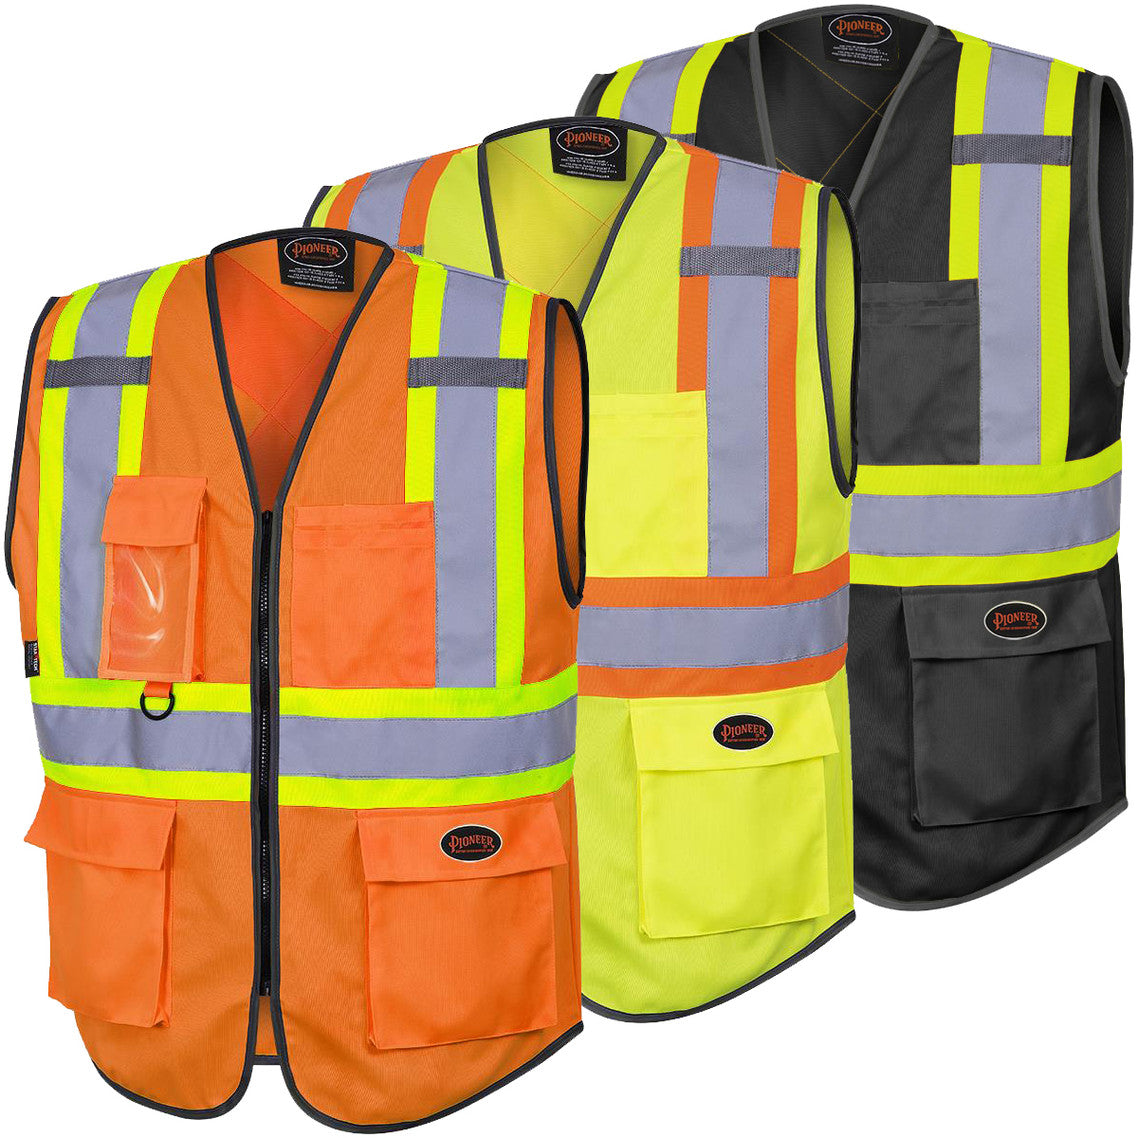 Pioneer 6958 Hi-Viz Orange Solid Tricoat Safety Vest with Zipper Closure